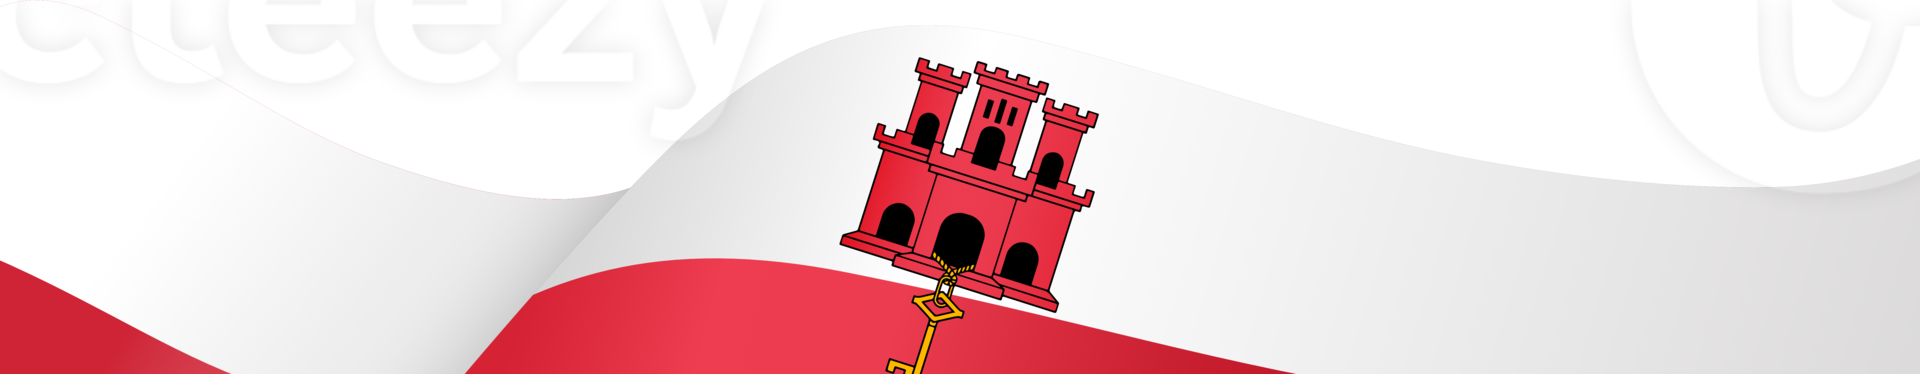 gibraltar flagga Vinka isolerat på png eller transparent bakgrund